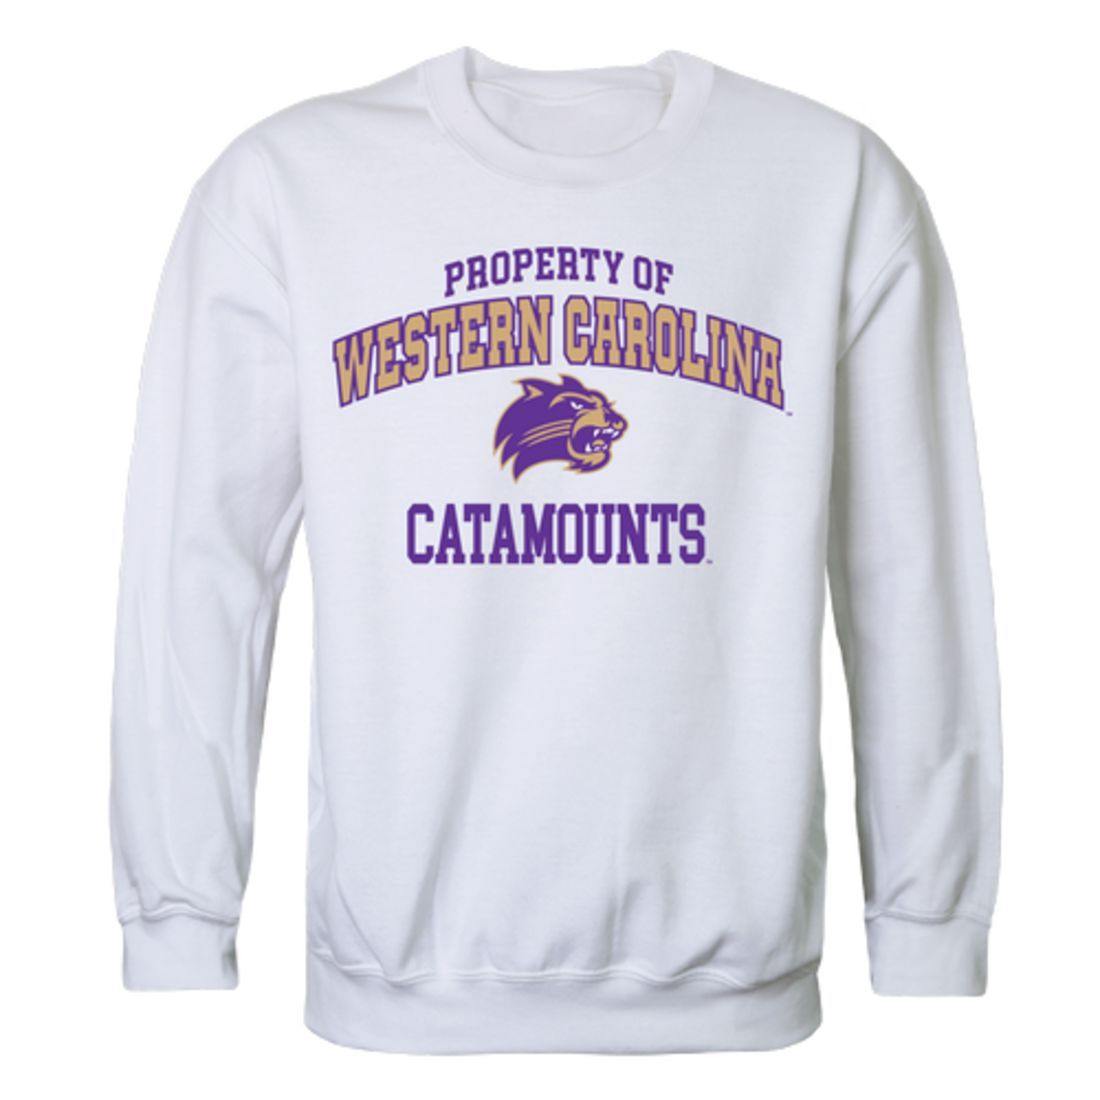 WCU Western Carolina University Catamounts Property Crewneck Pullover Sweatshirt Sweater White-Campus-Wardrobe